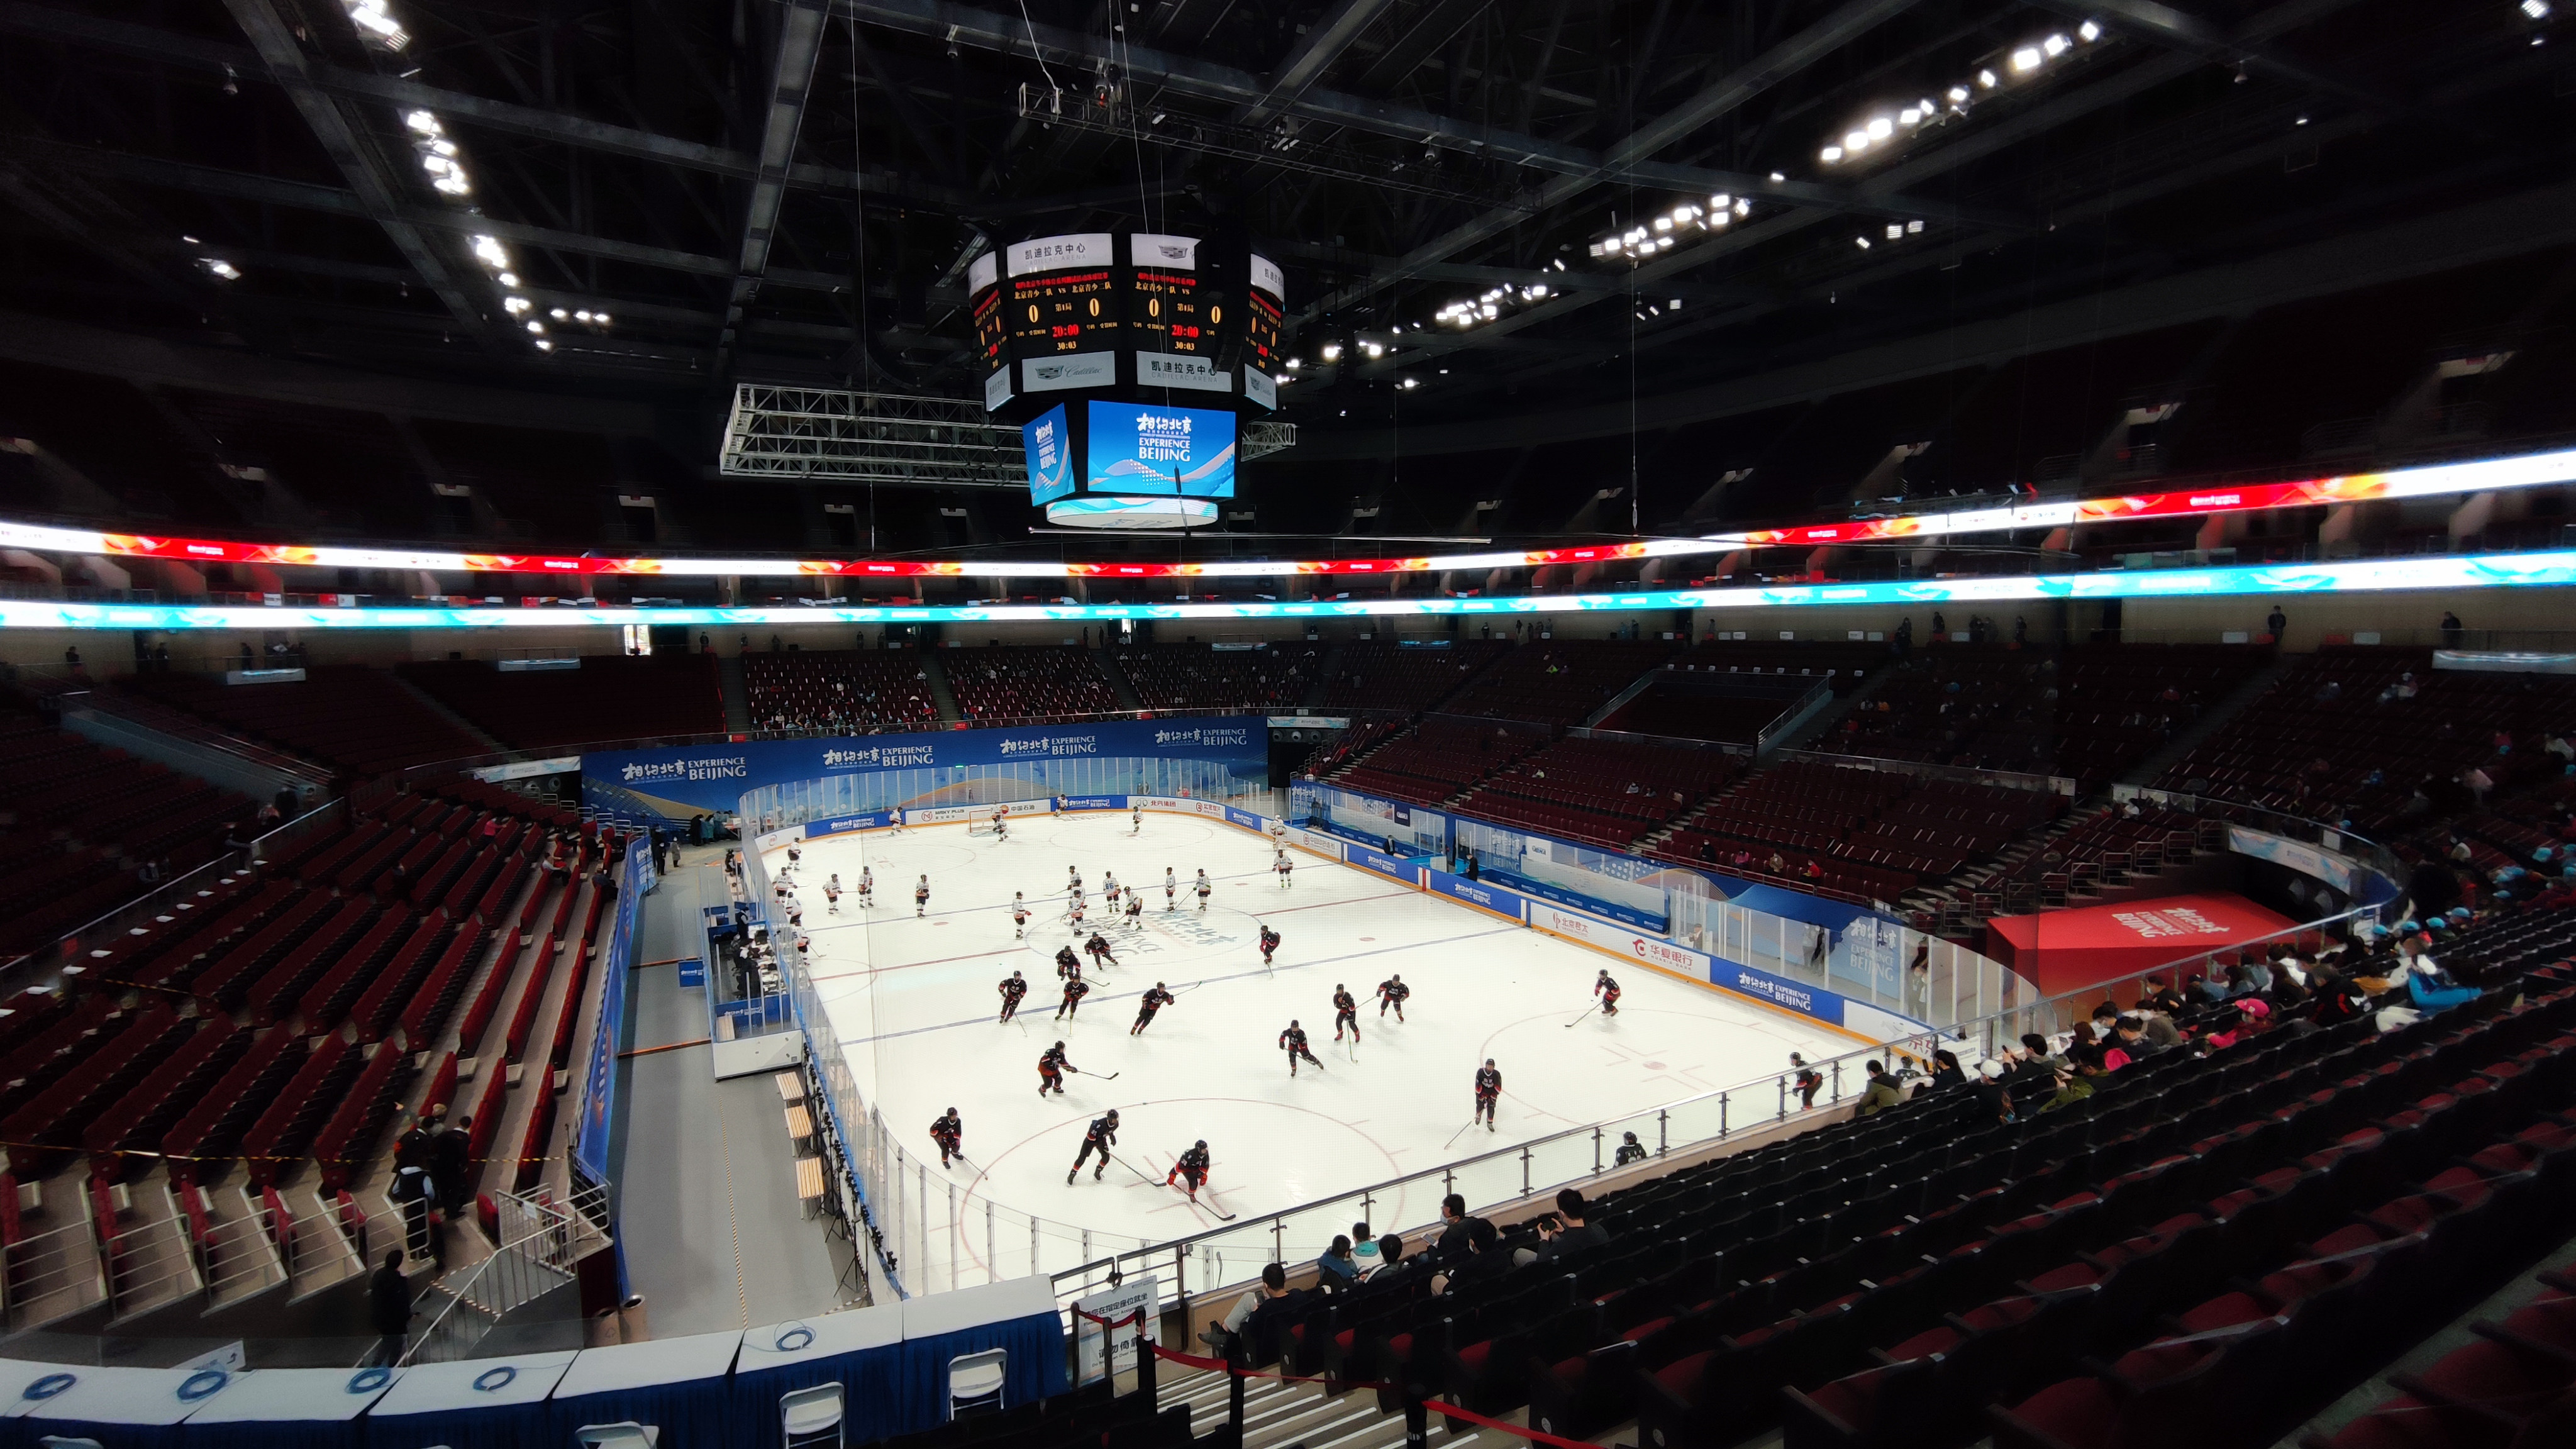 Beijing 2022 Winter Olympics: Stress test held at ice hockey venue - CGTN